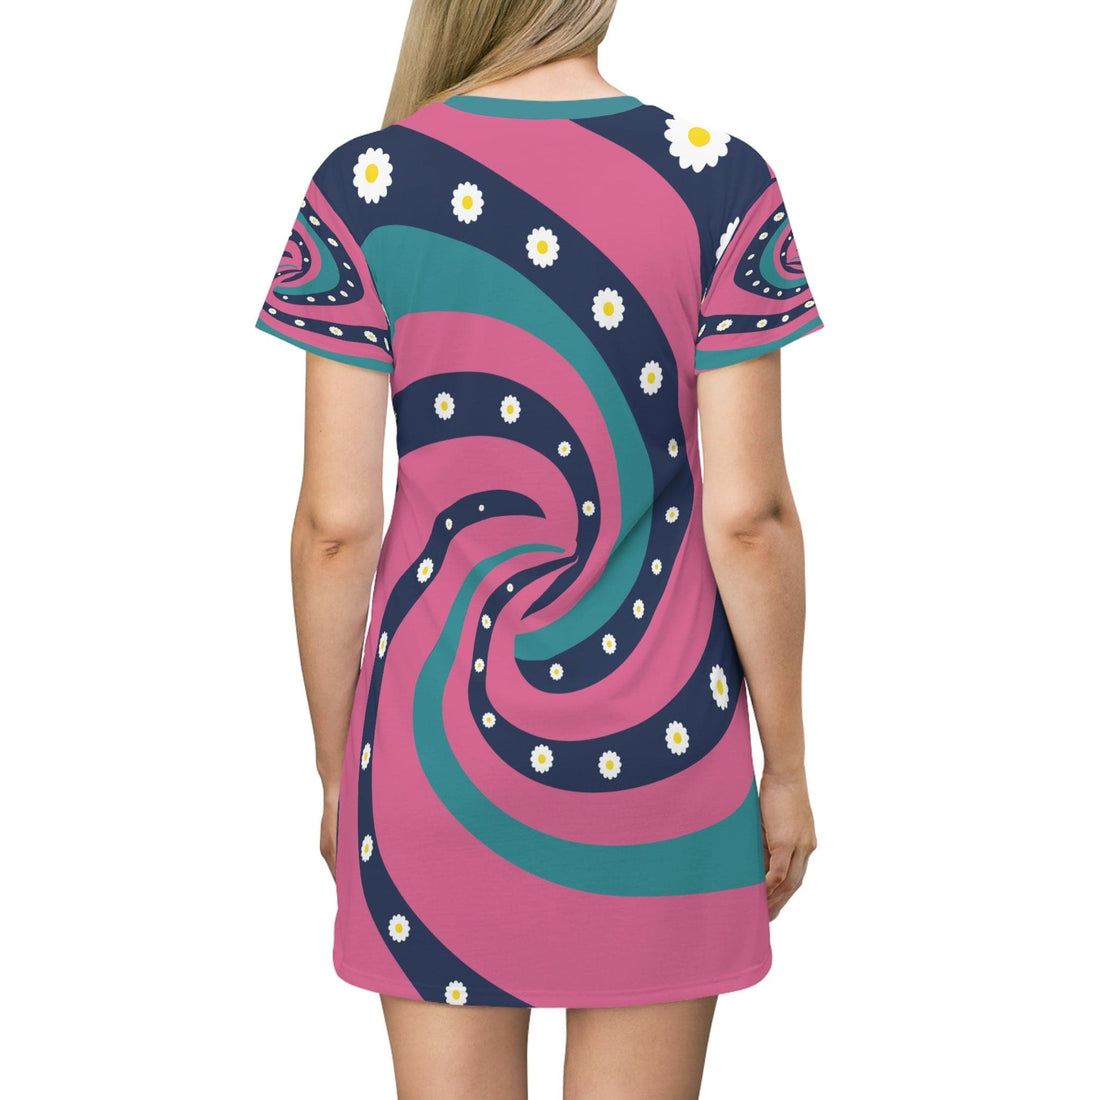 Kate McEnroe New York Retro 70s Psychedelic Groovy Swirl Flower Power Tshirt Dress in Mid Century Modern Teal Blue, Pink, Navy, MCM Summer Party Dress, Beach Wear Dresses S 21474881676877458734